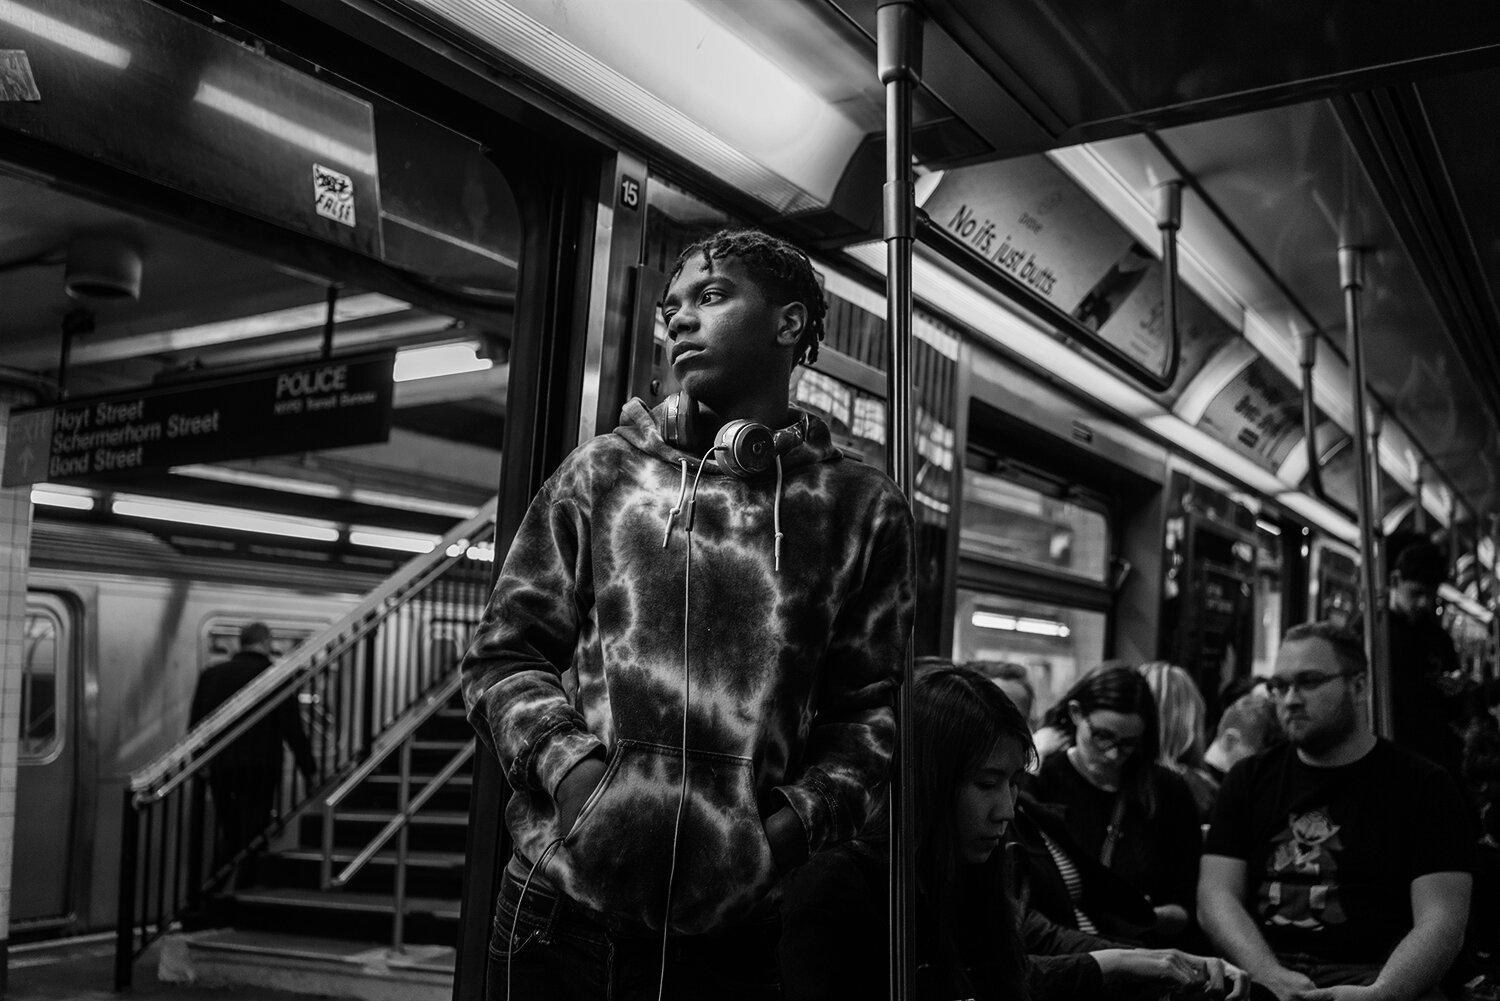 NYC_Subway_2018_Young_African_American_Gaze-003.jpg